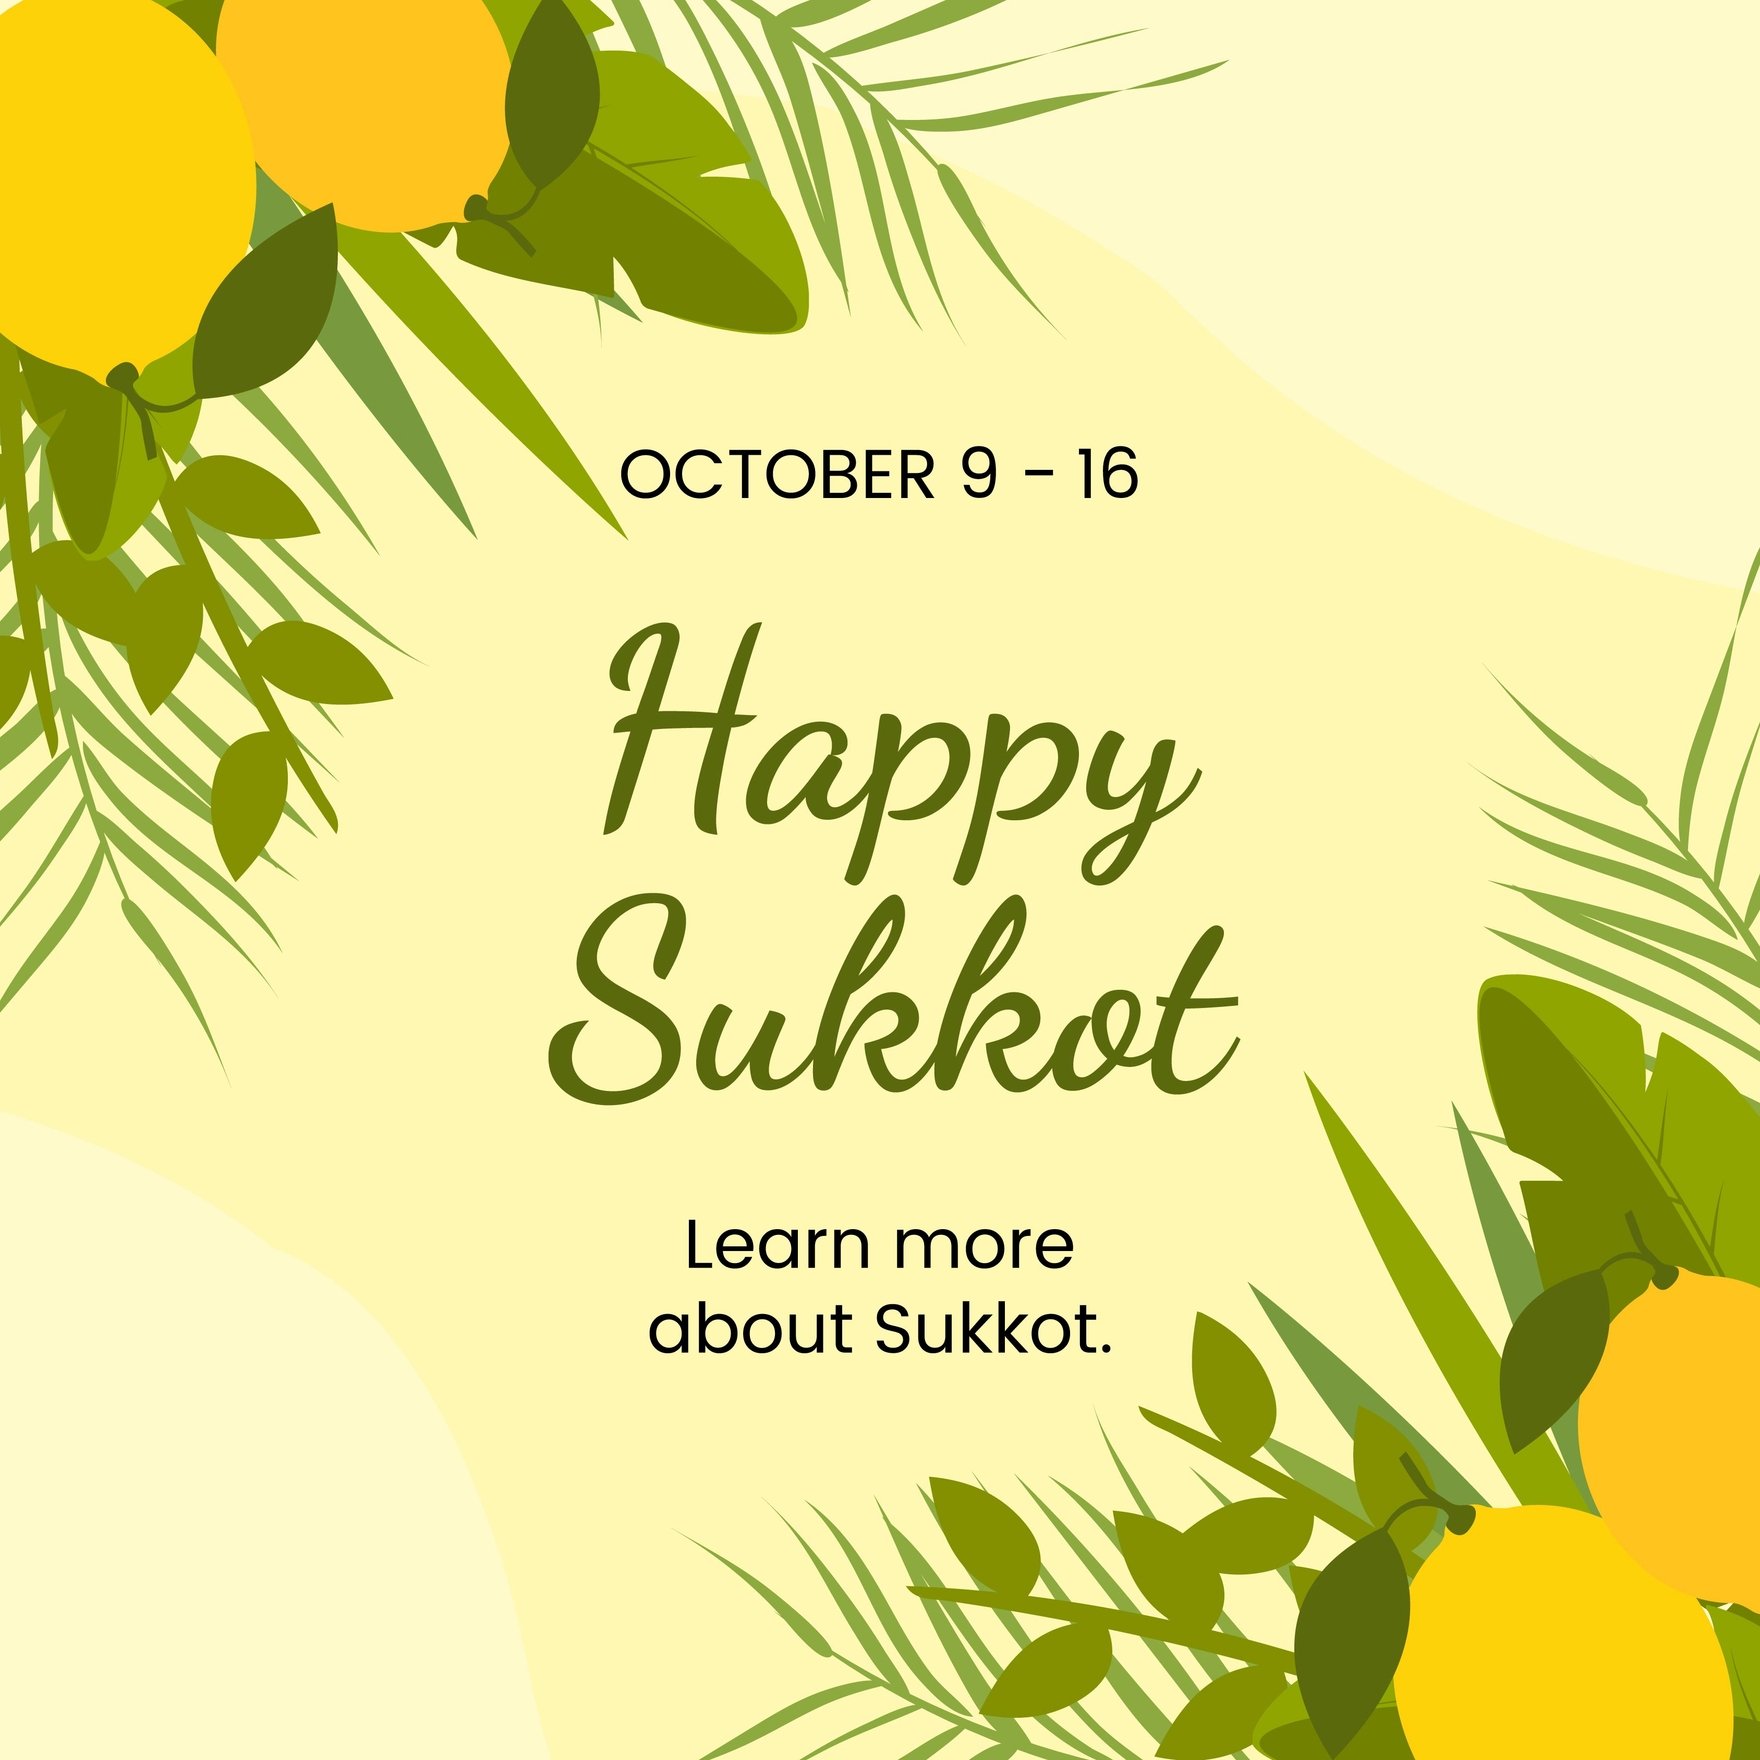 Free Sukkot Instagram Post in Illustrator, PSD, EPS, SVG, JPG, PNG